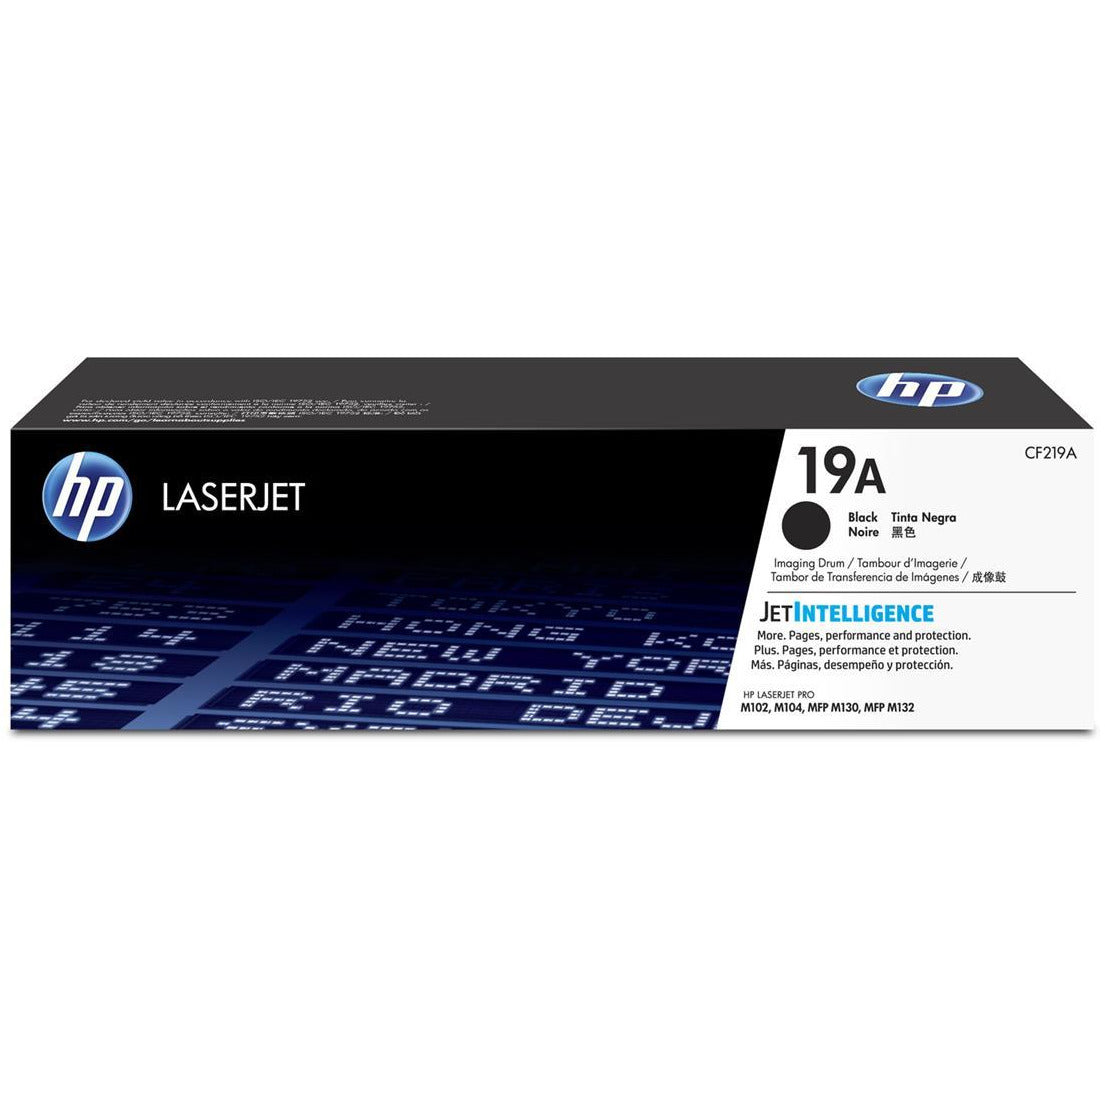 HP 19A (Yield: 12,000 Pages) Original LaserJet Imaging Drum (Black)